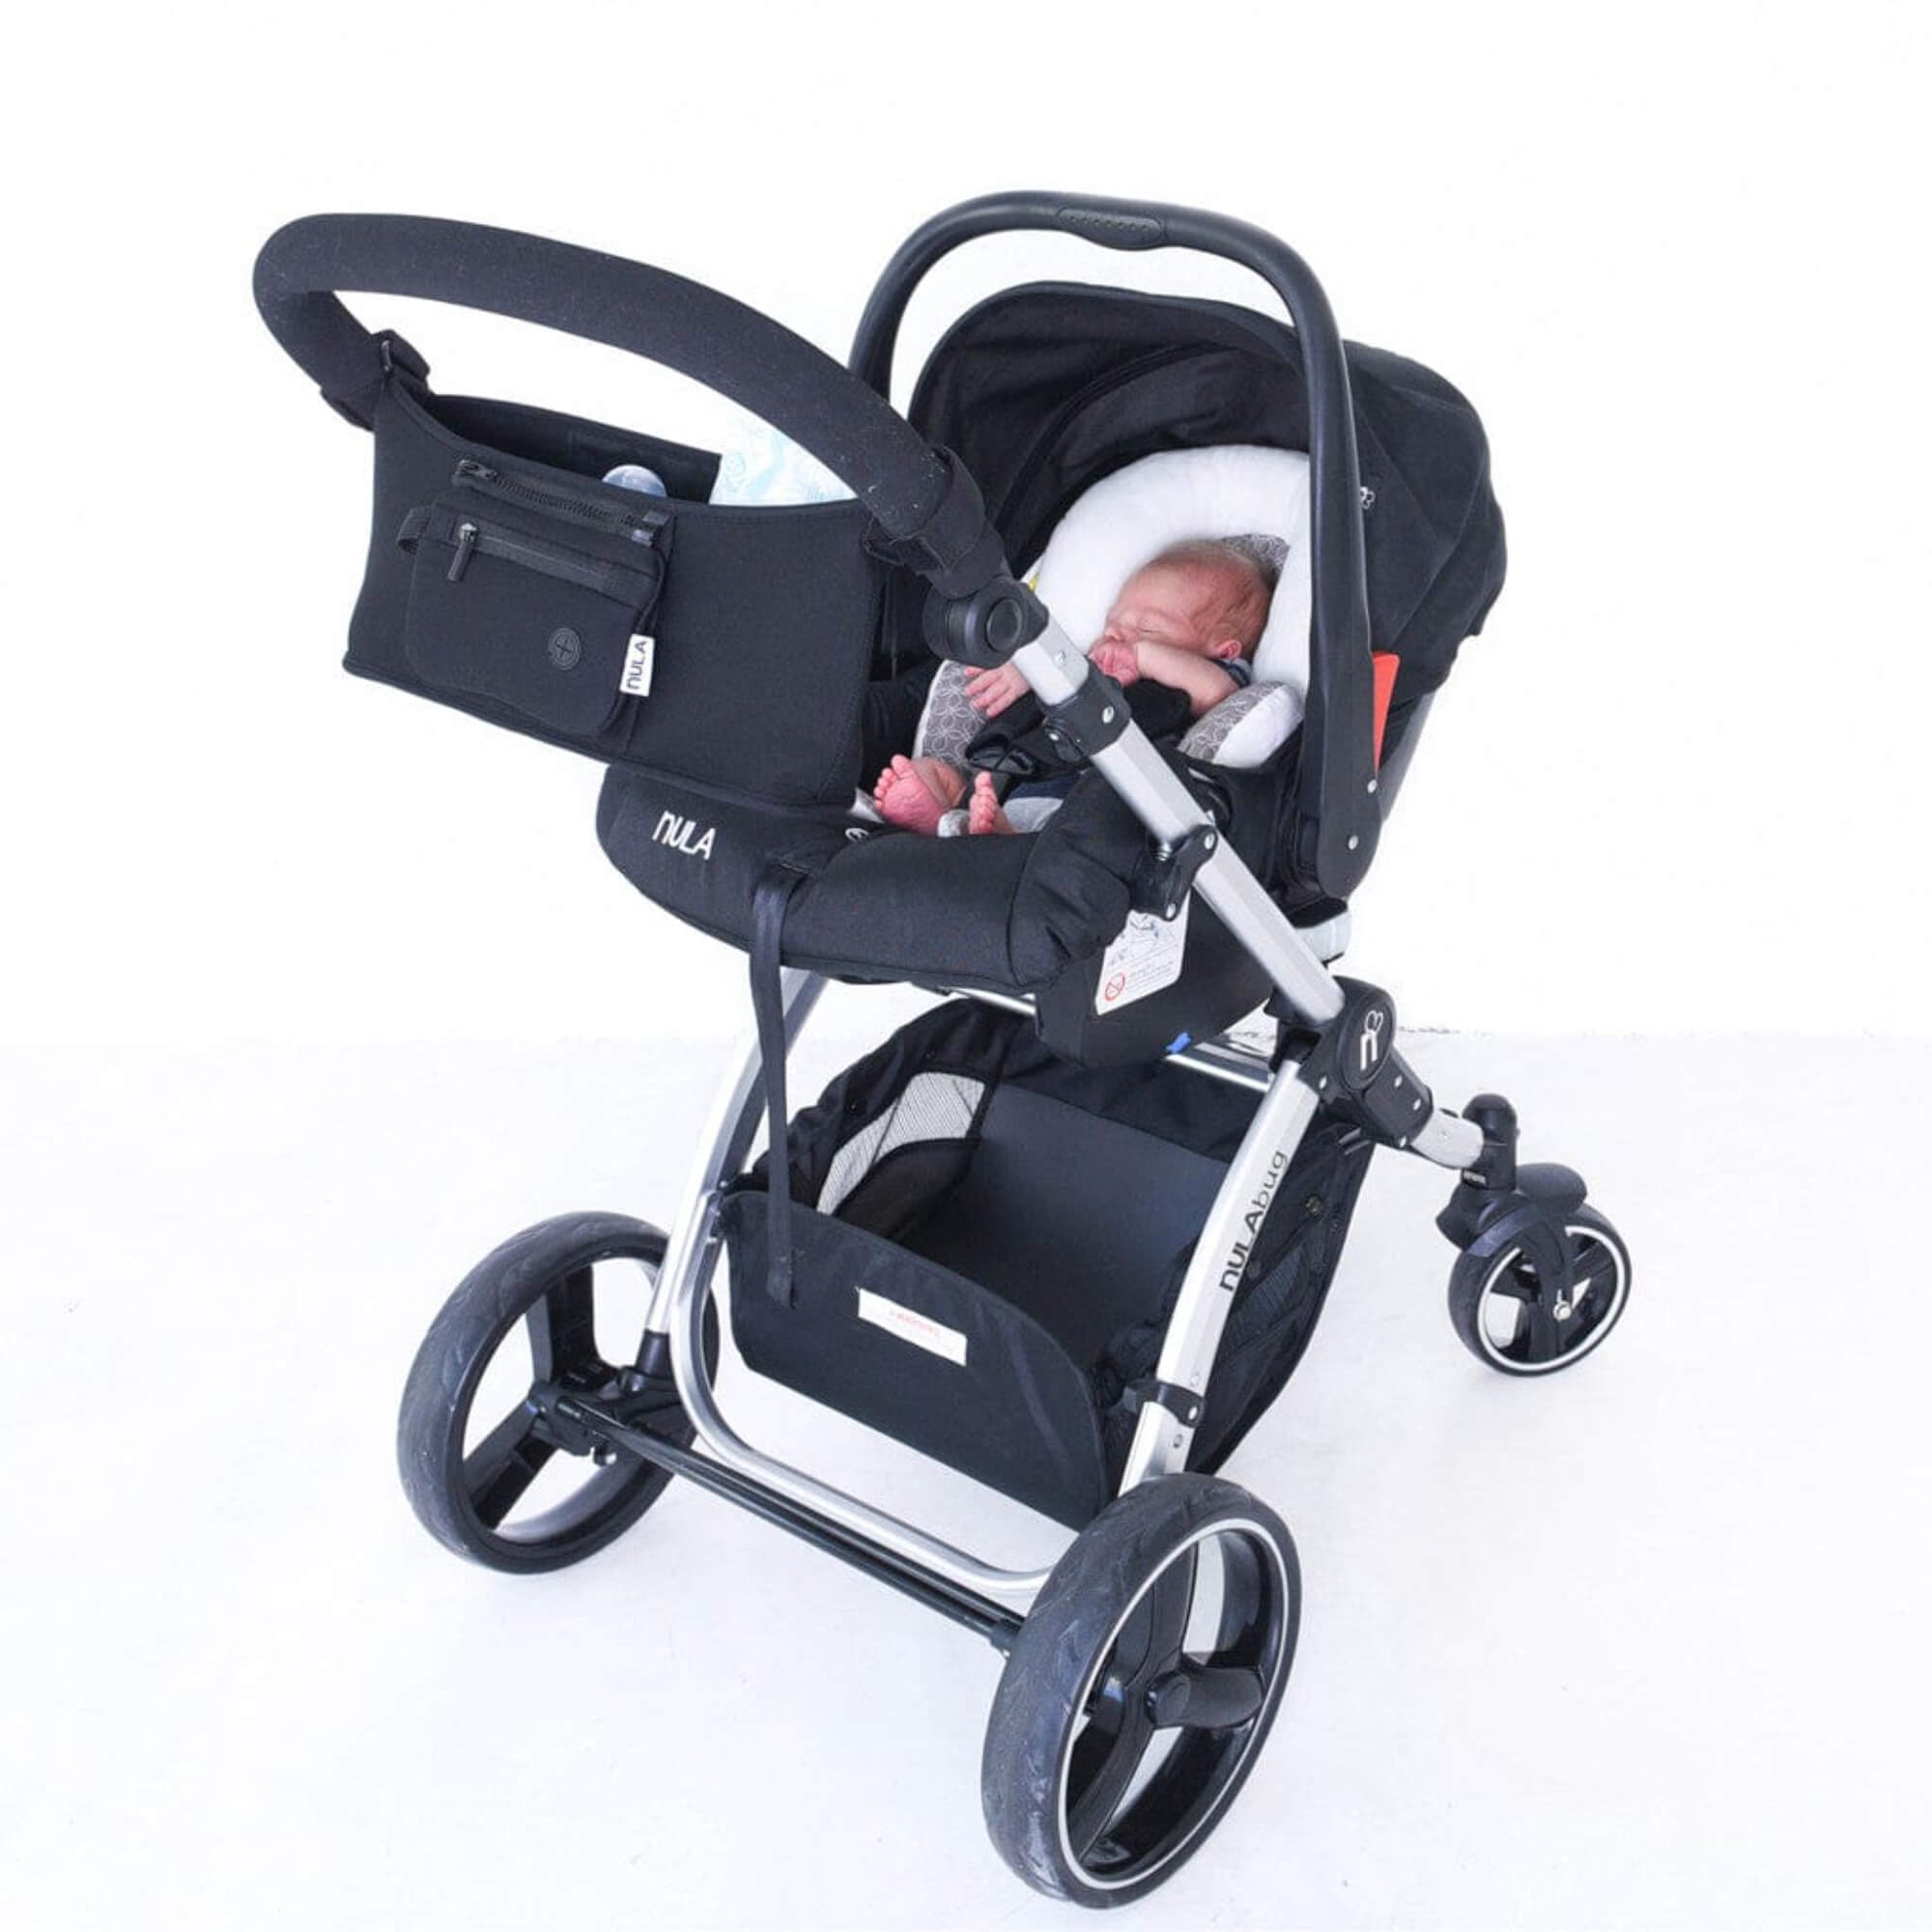 noola grab go stroller organiser black baby stroller accessories